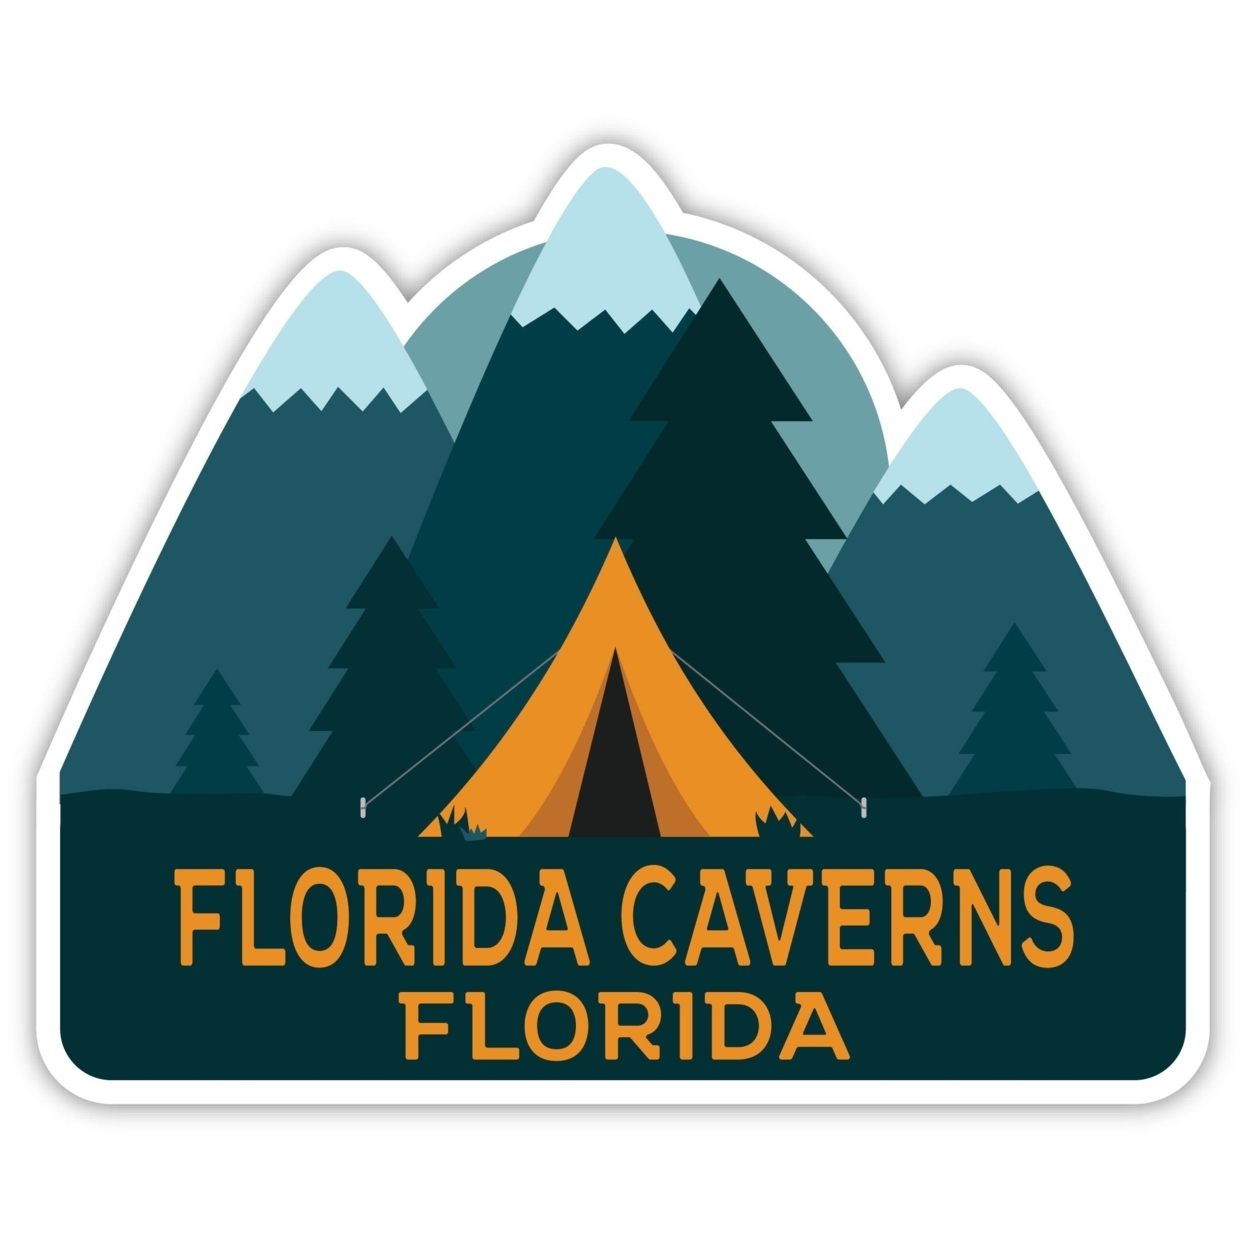 Florida Caverns Florida Souvenir Decorative Stickers (Choose Theme And Size) - 4-Pack, 2-Inch, Tent